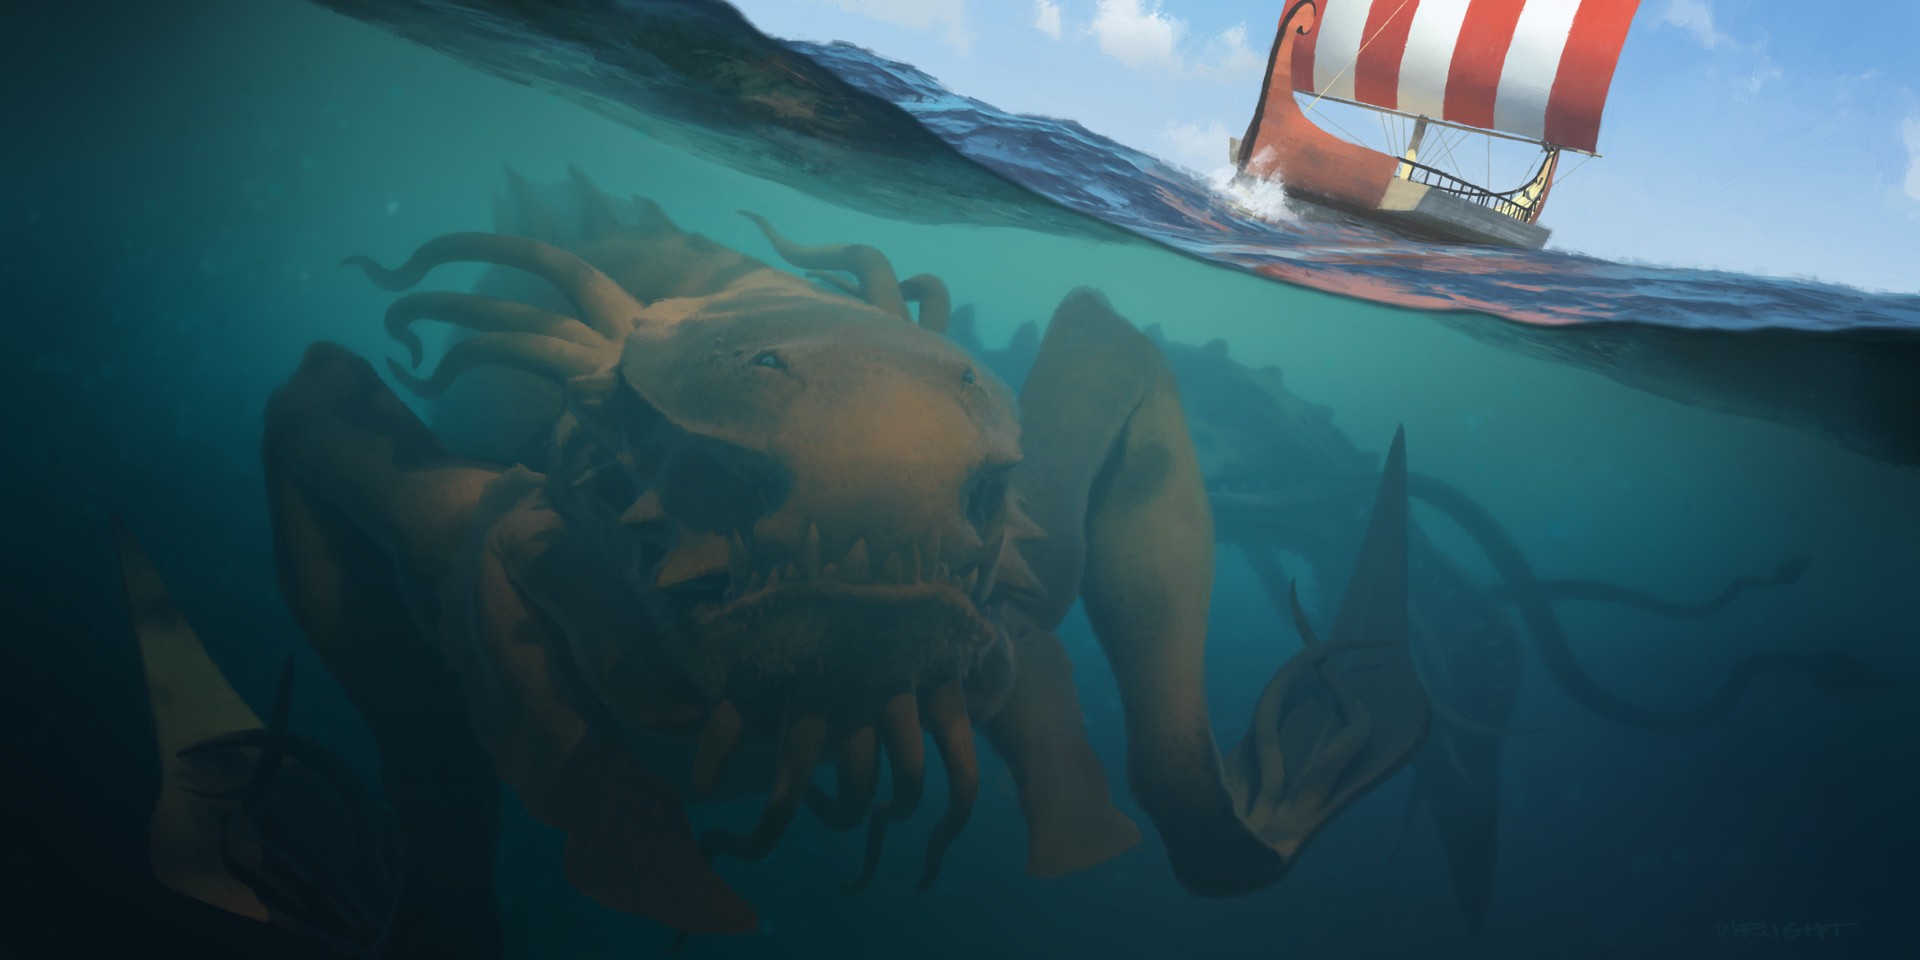 General 1920x960 creature underwater fantasy art ship vehicle sea artwork